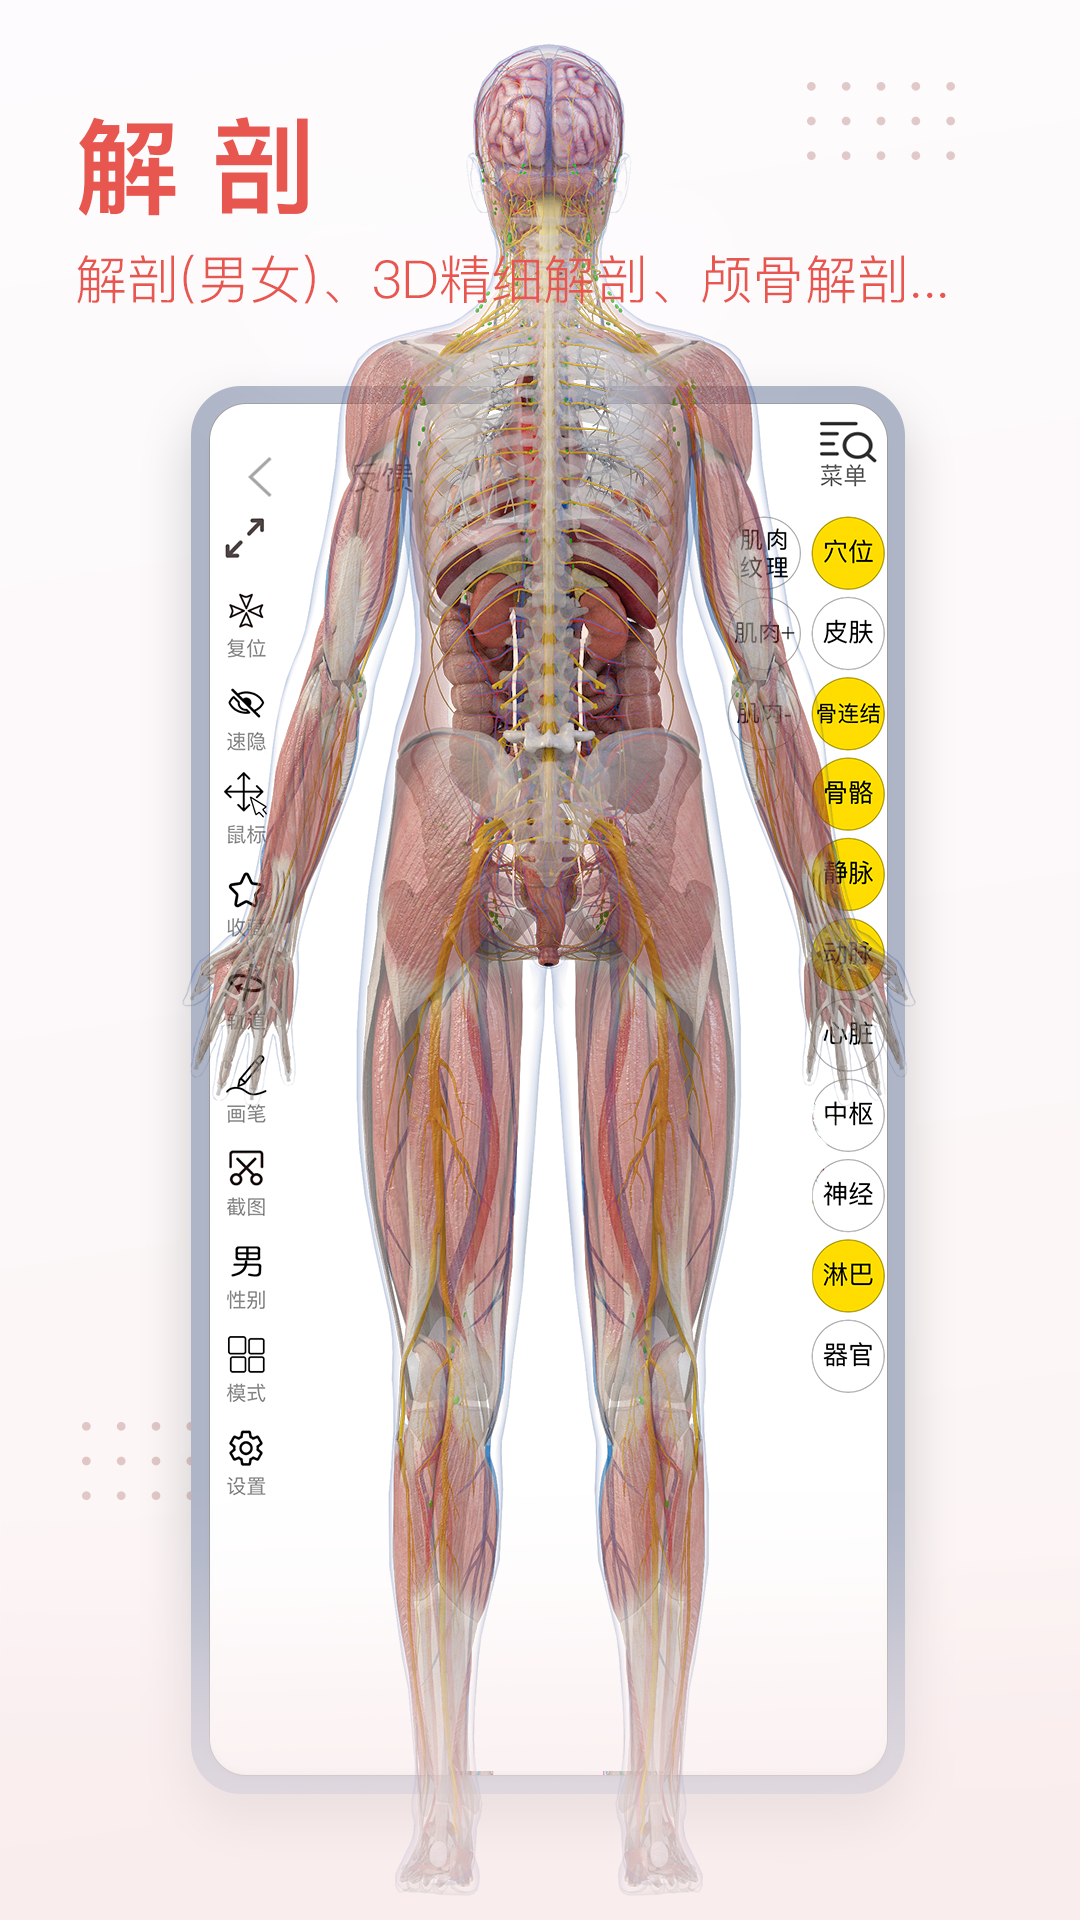 3DBody解剖v8.8.12截图5